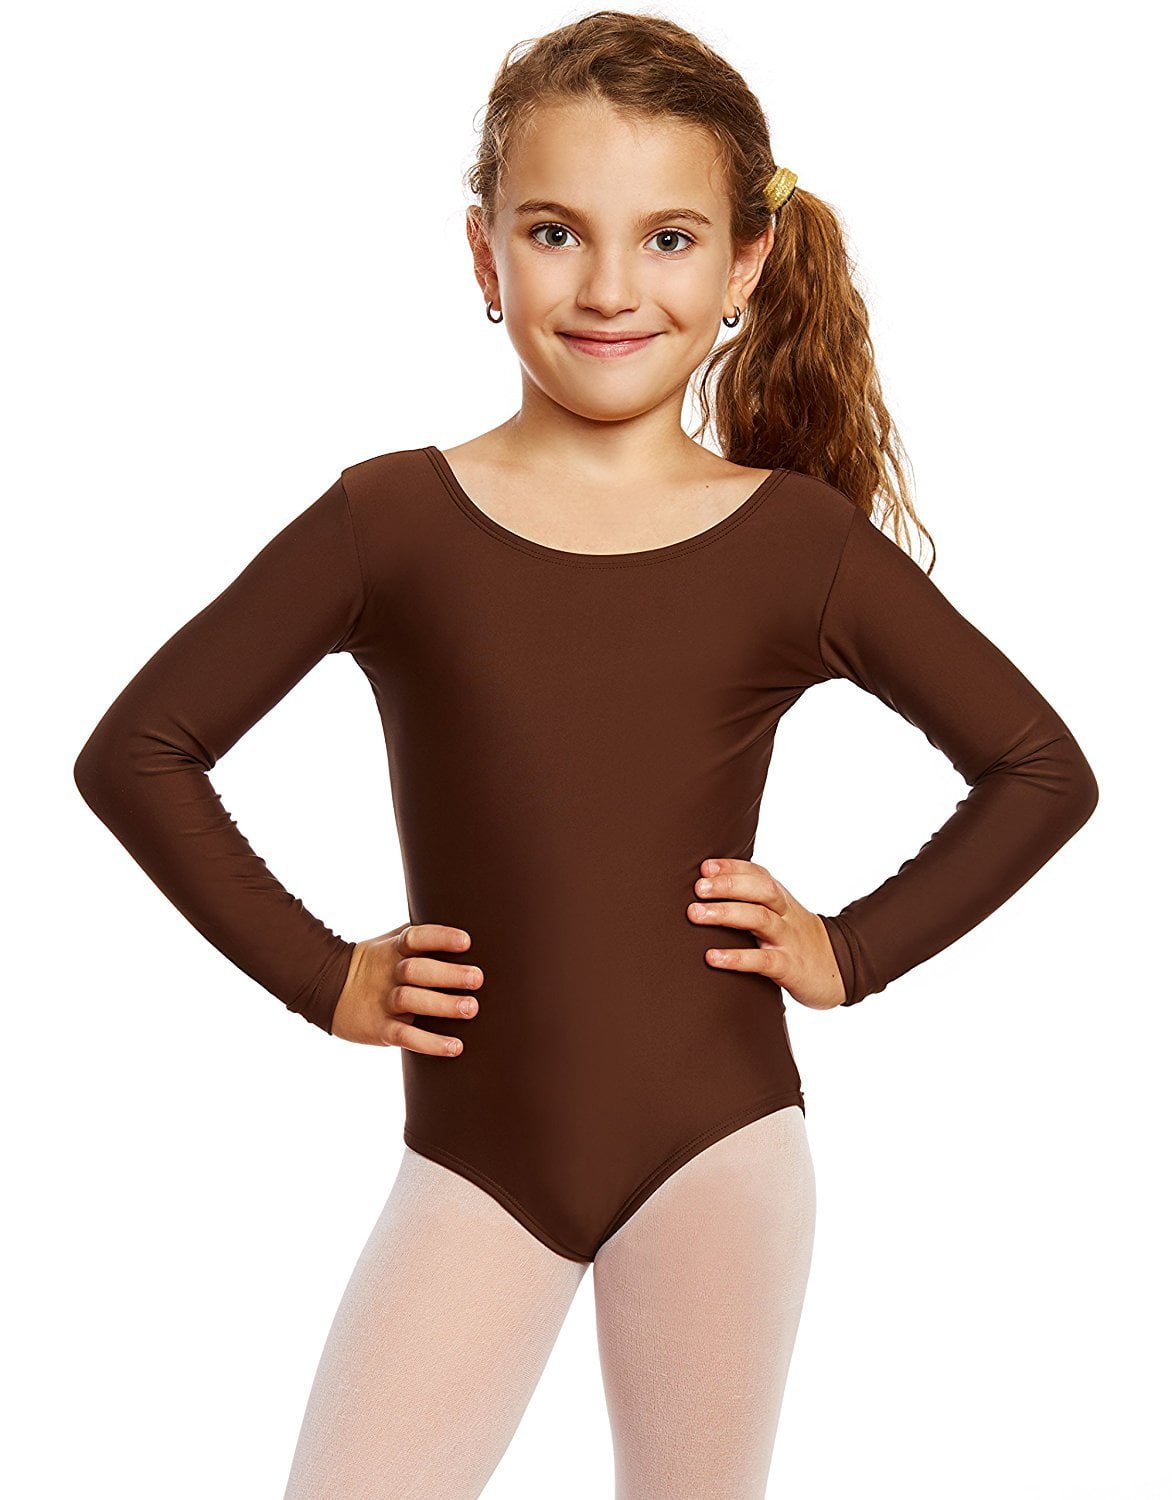 Child Girls Leotard Sleeved Stretchy Dance Gymnastics Ballet Sports Uniform Top 